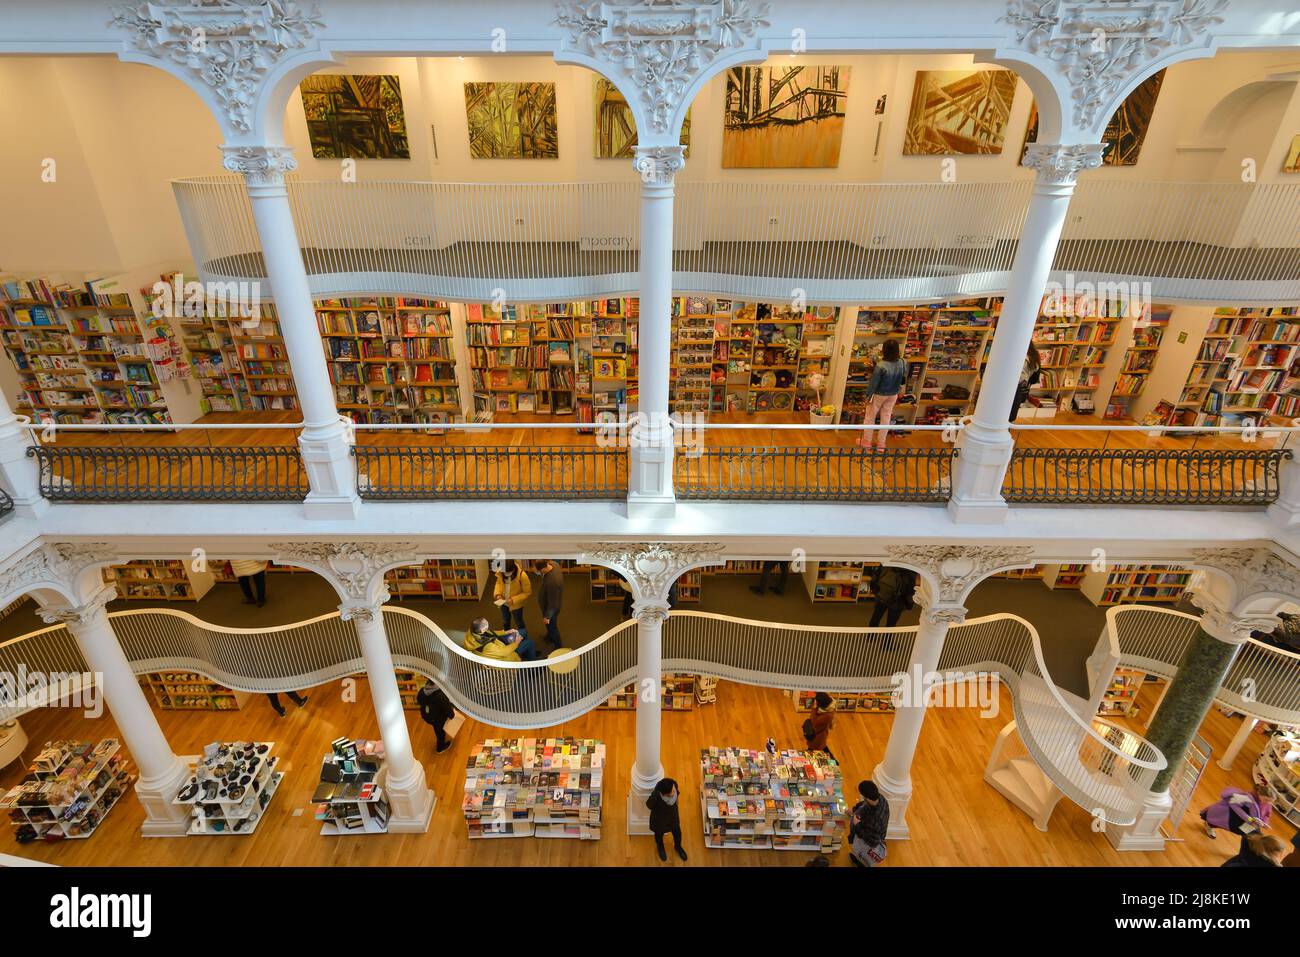 Cărturești Carusel library interior in Bucharest. Carturesti Carusel is a famous bookstore in Romania. Stock Photo